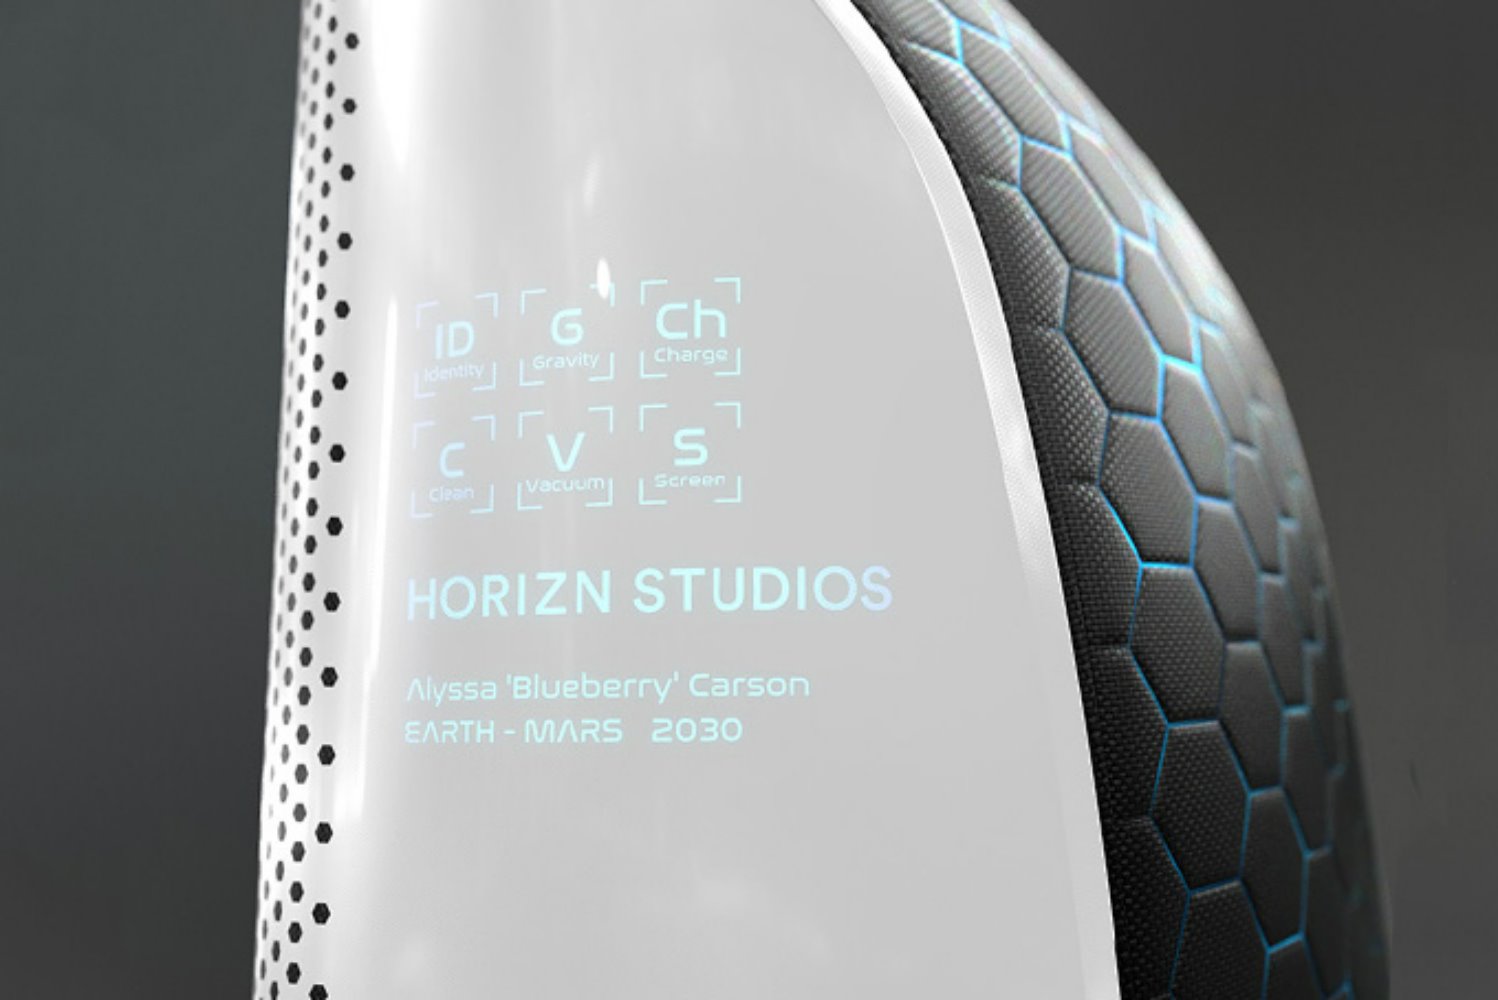 maleta espacial de Horizn studios